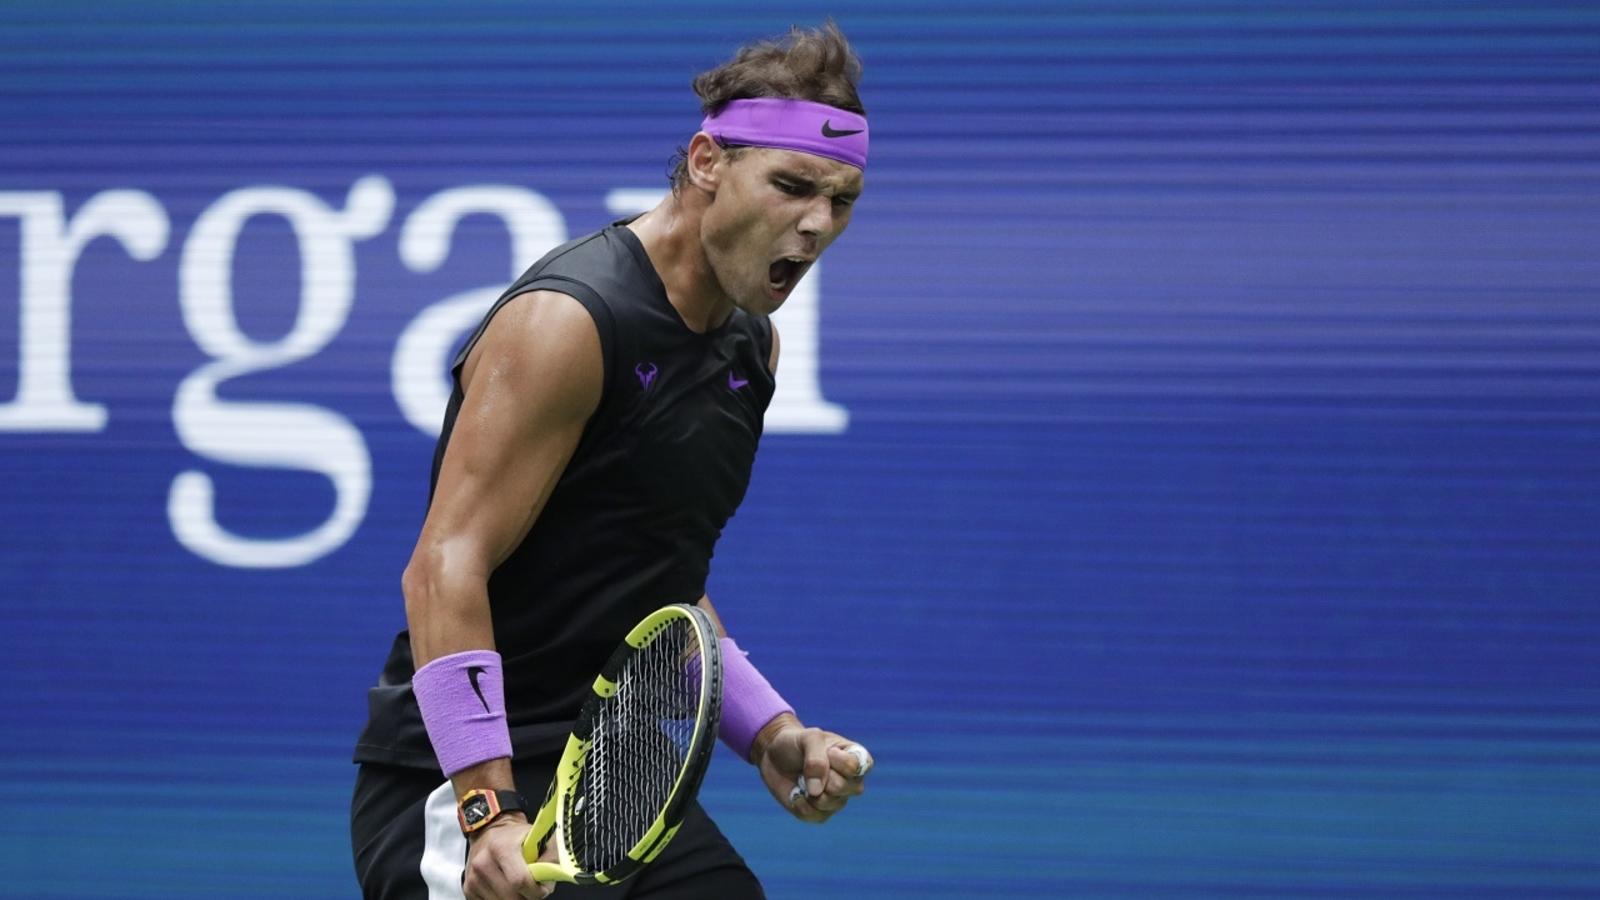 Rafa Nadal US Open 2019 Wallpapers - Wallpaper Cave